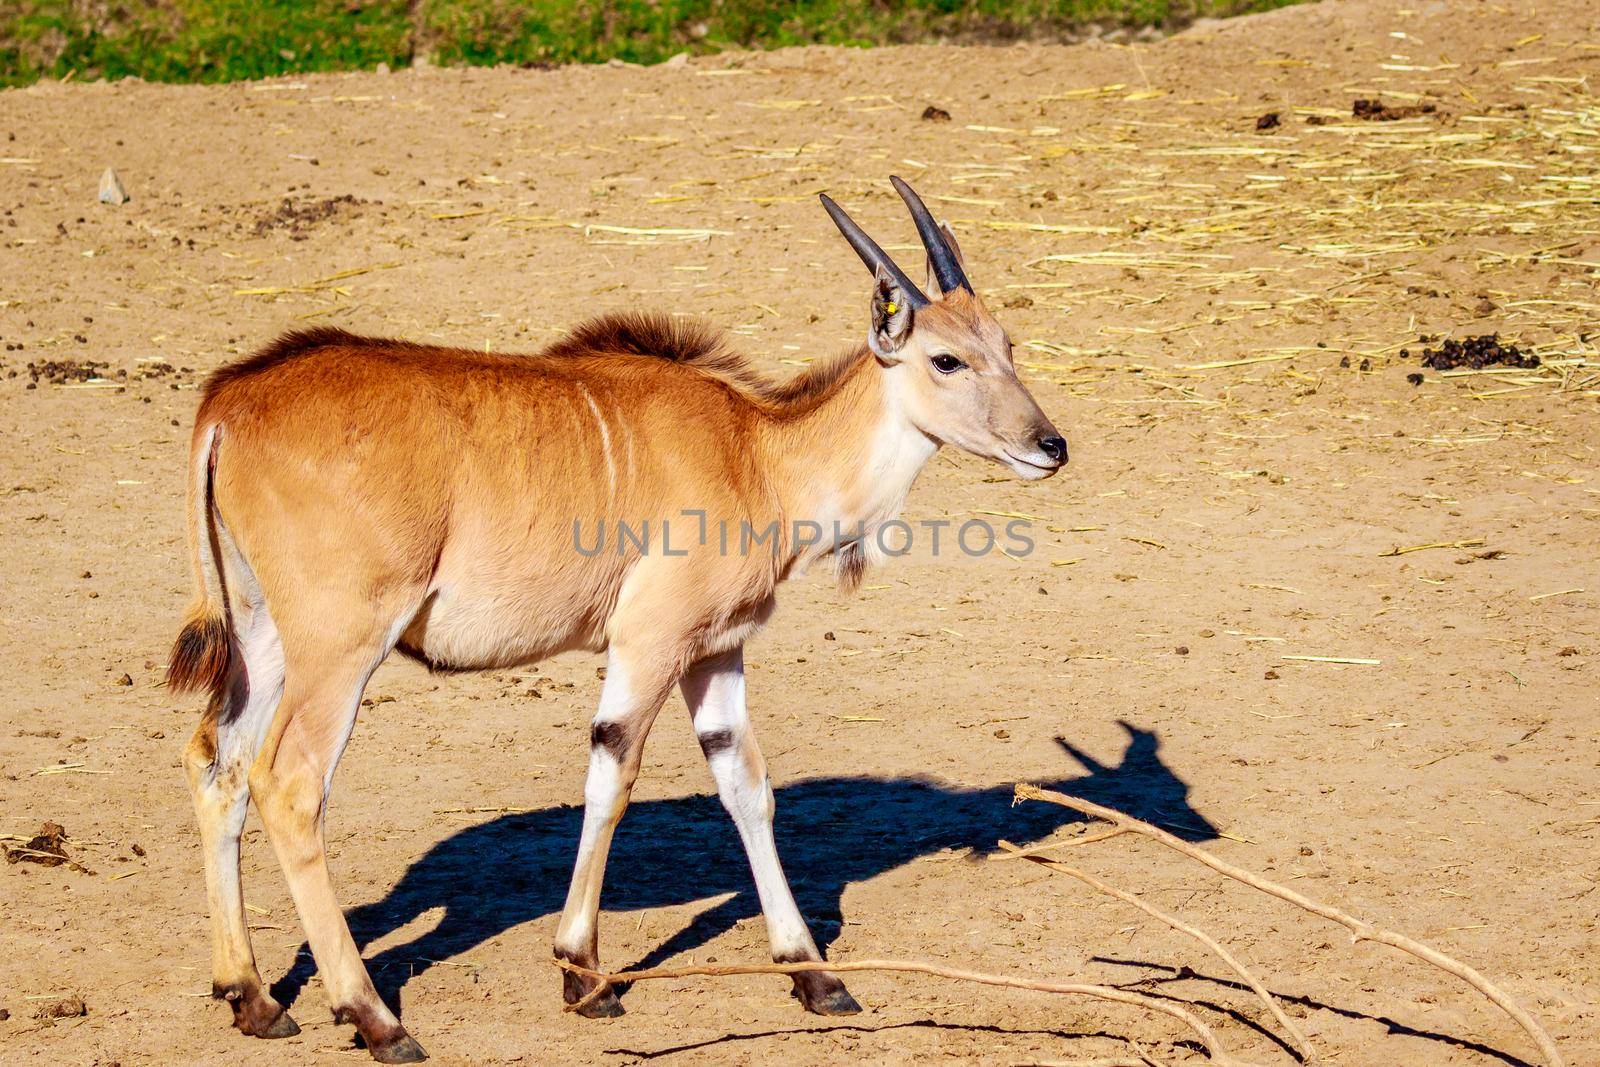 A female common eland antelope walking across the dry land.